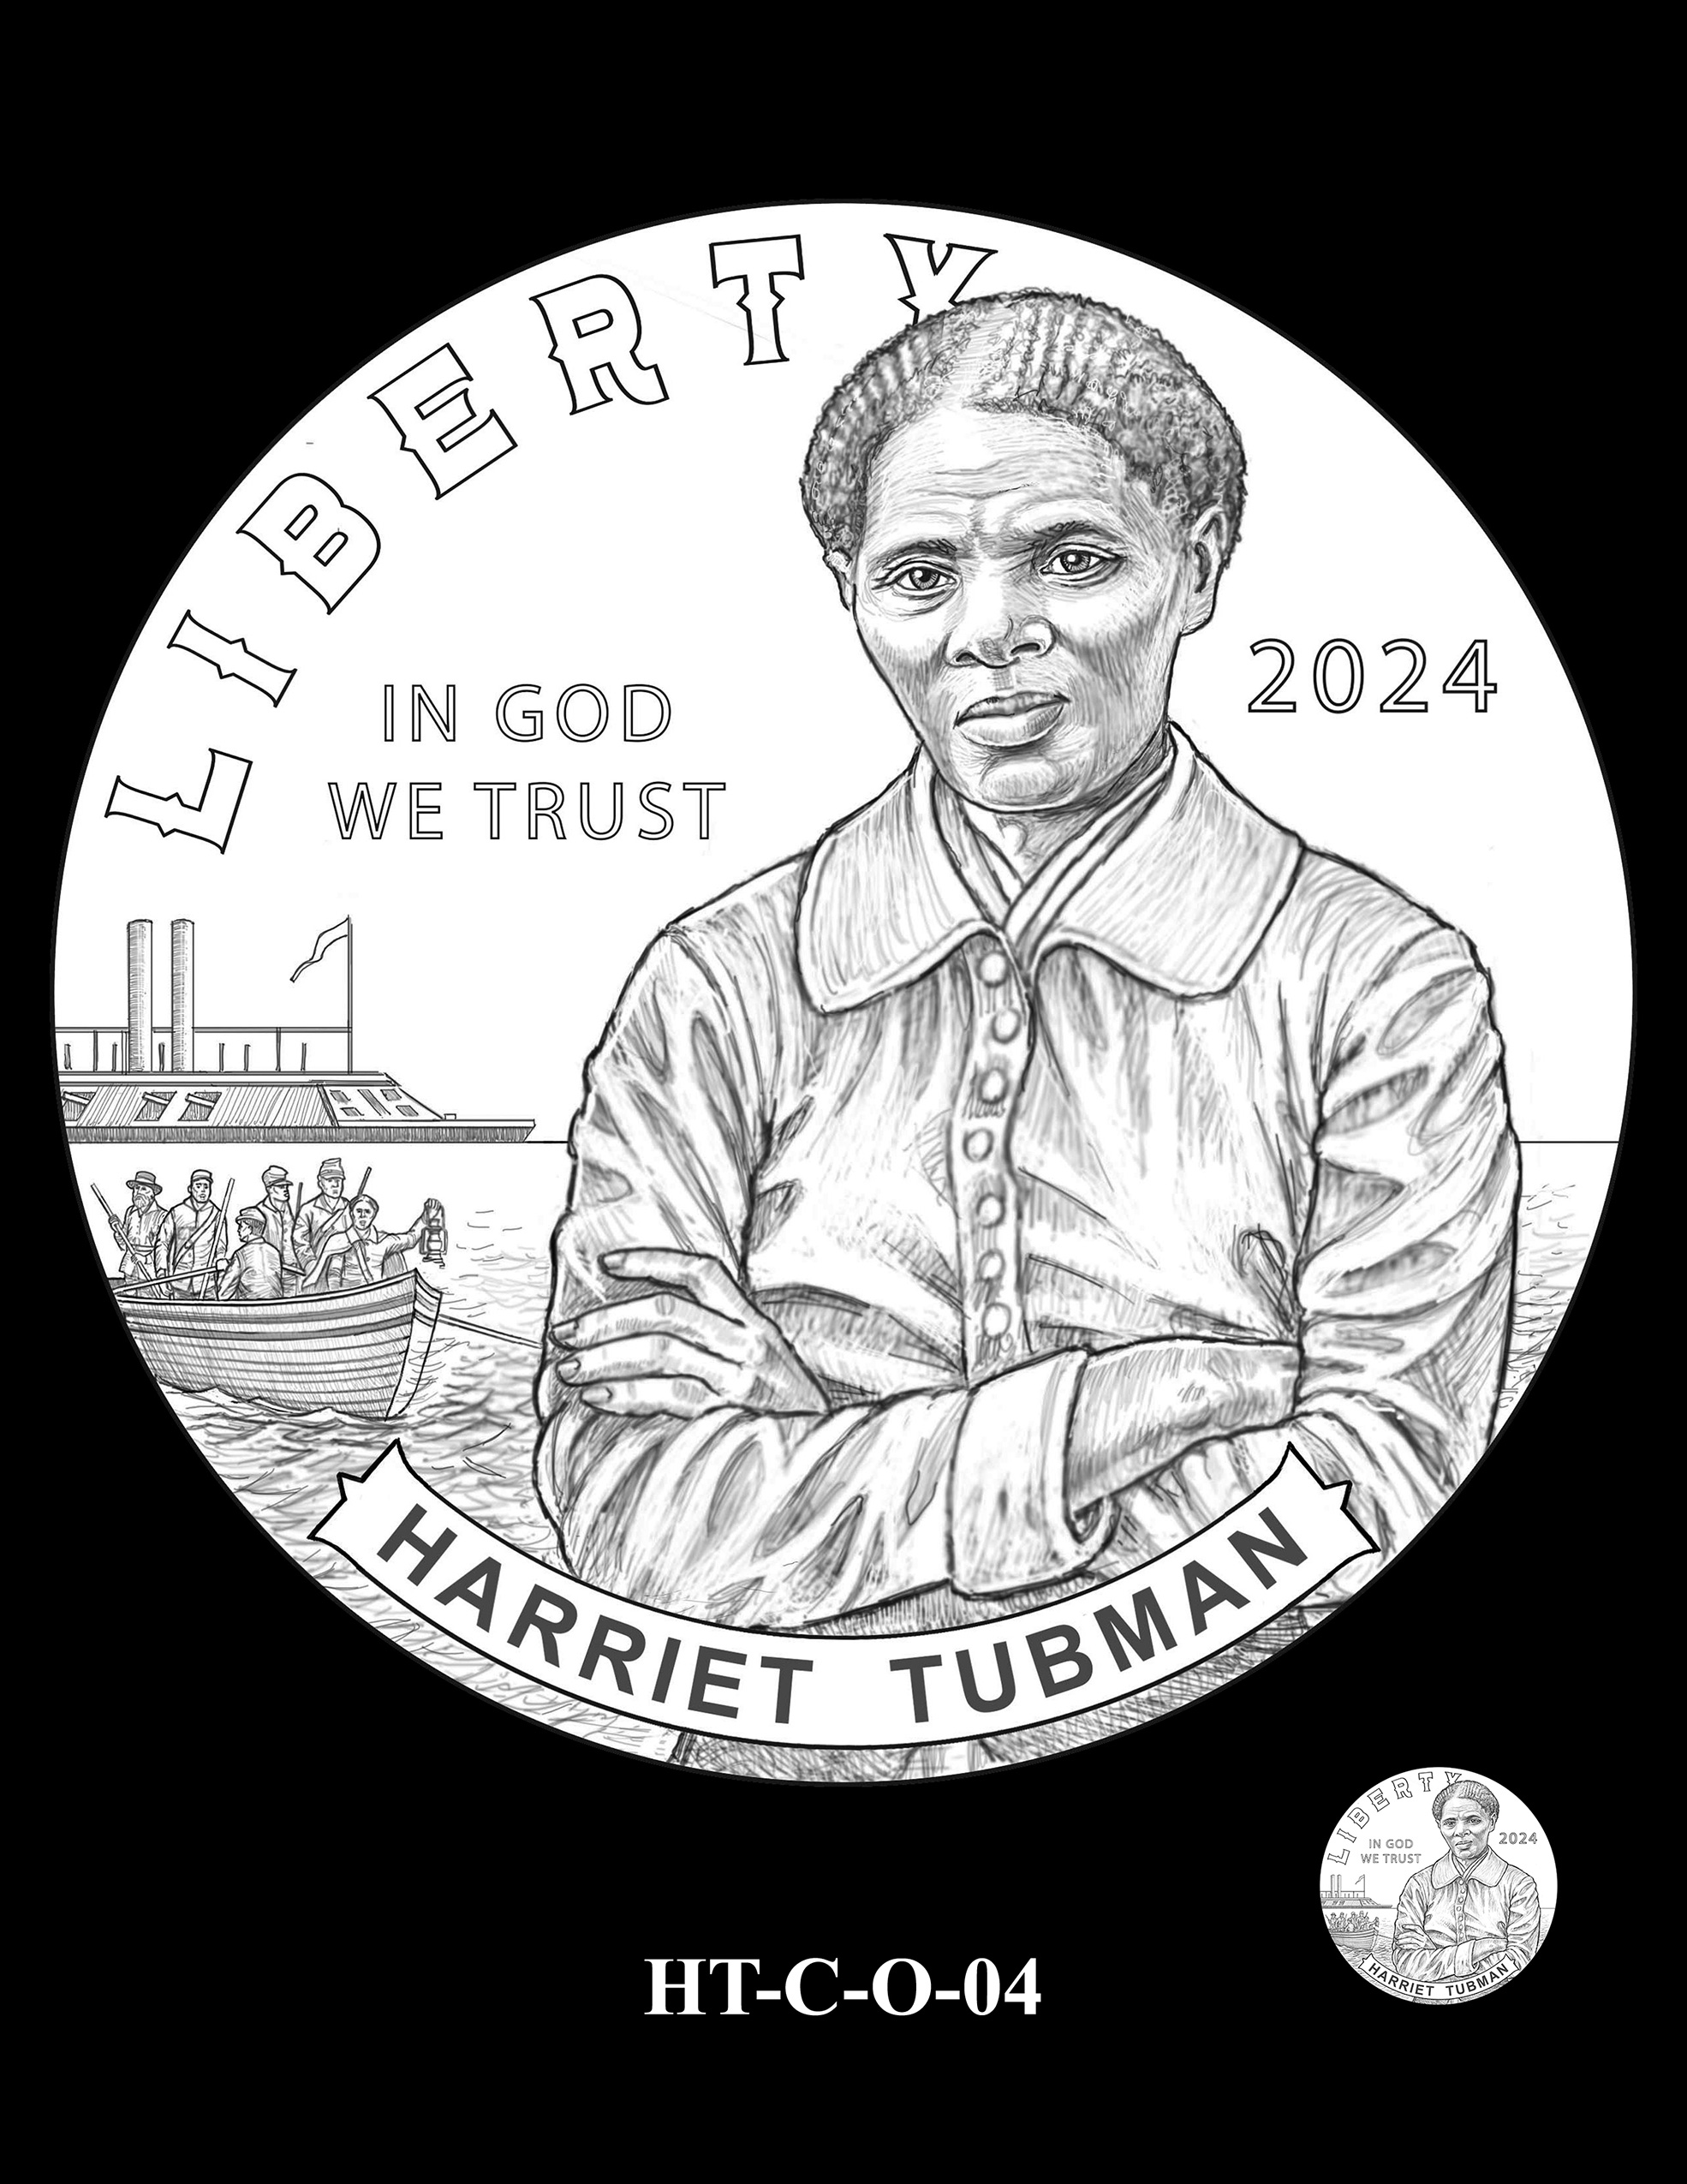 HT-C-O-04 -- Harriet Tubman